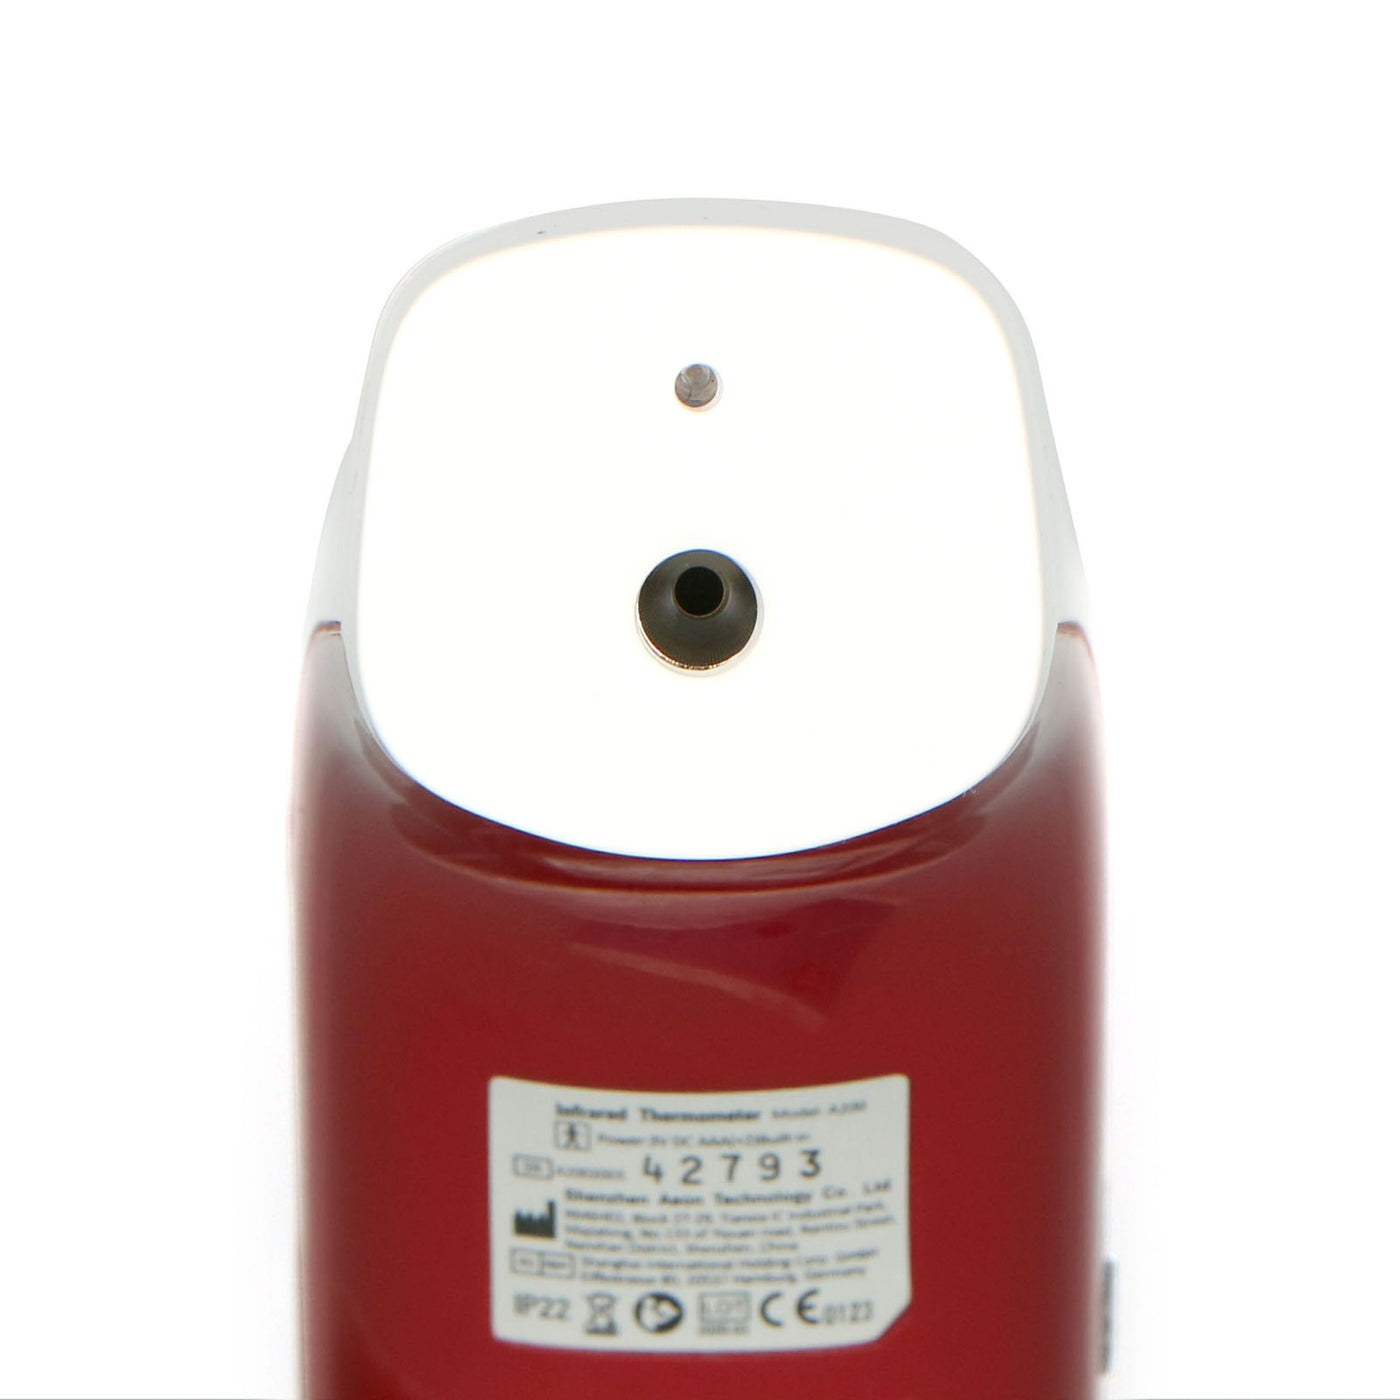 Alecto BC38 - Voorhoofdthermometer, infrarood, wit